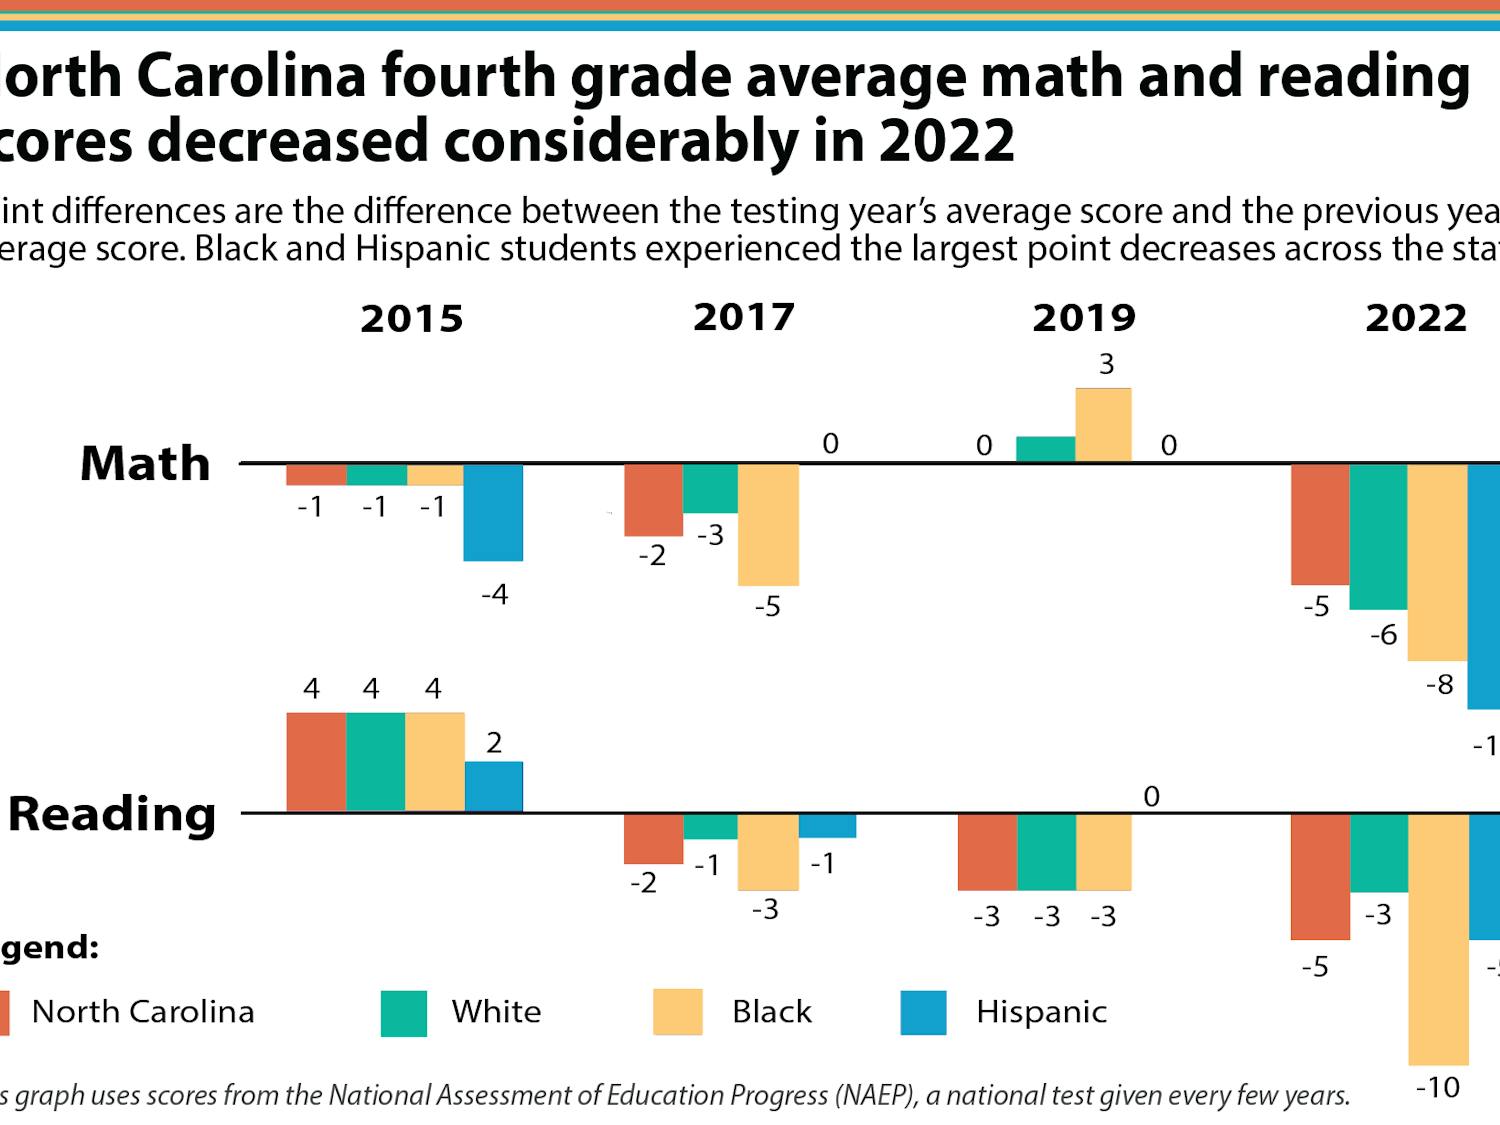 North Carolina fourth grade average math and reading scores decreased considerably in 2022